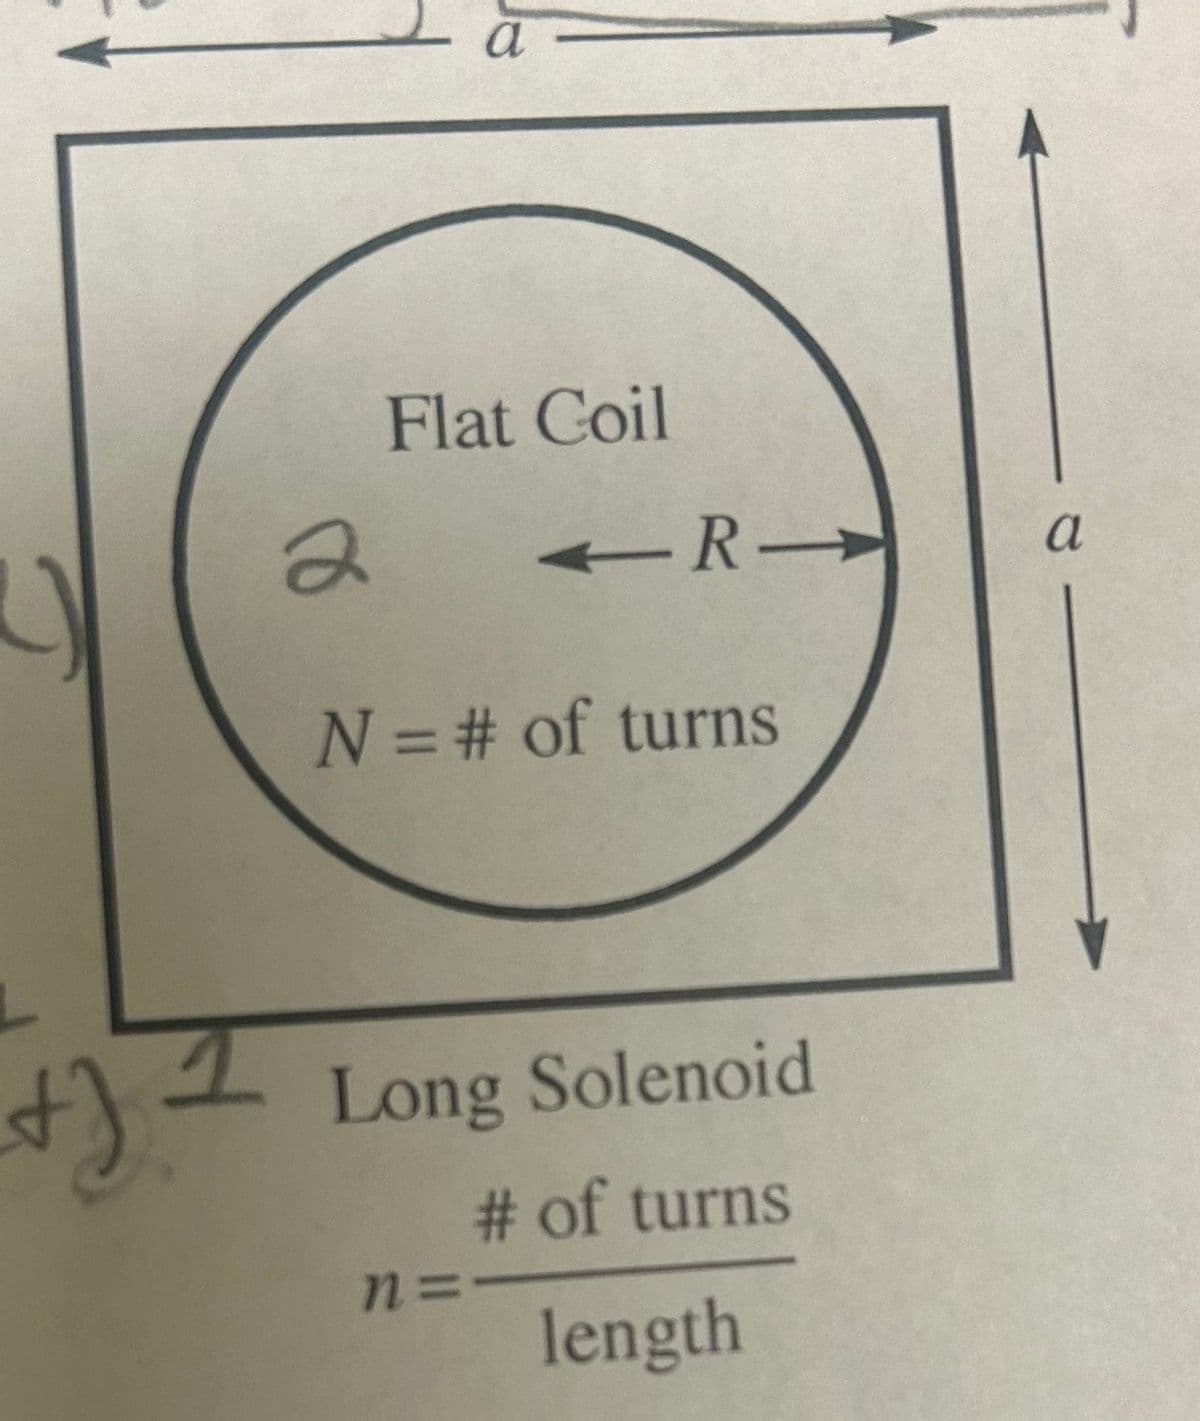 2
Flat Coil
-R-
a
N = # of turns
Long Solenoid
n=-
# of turns
length